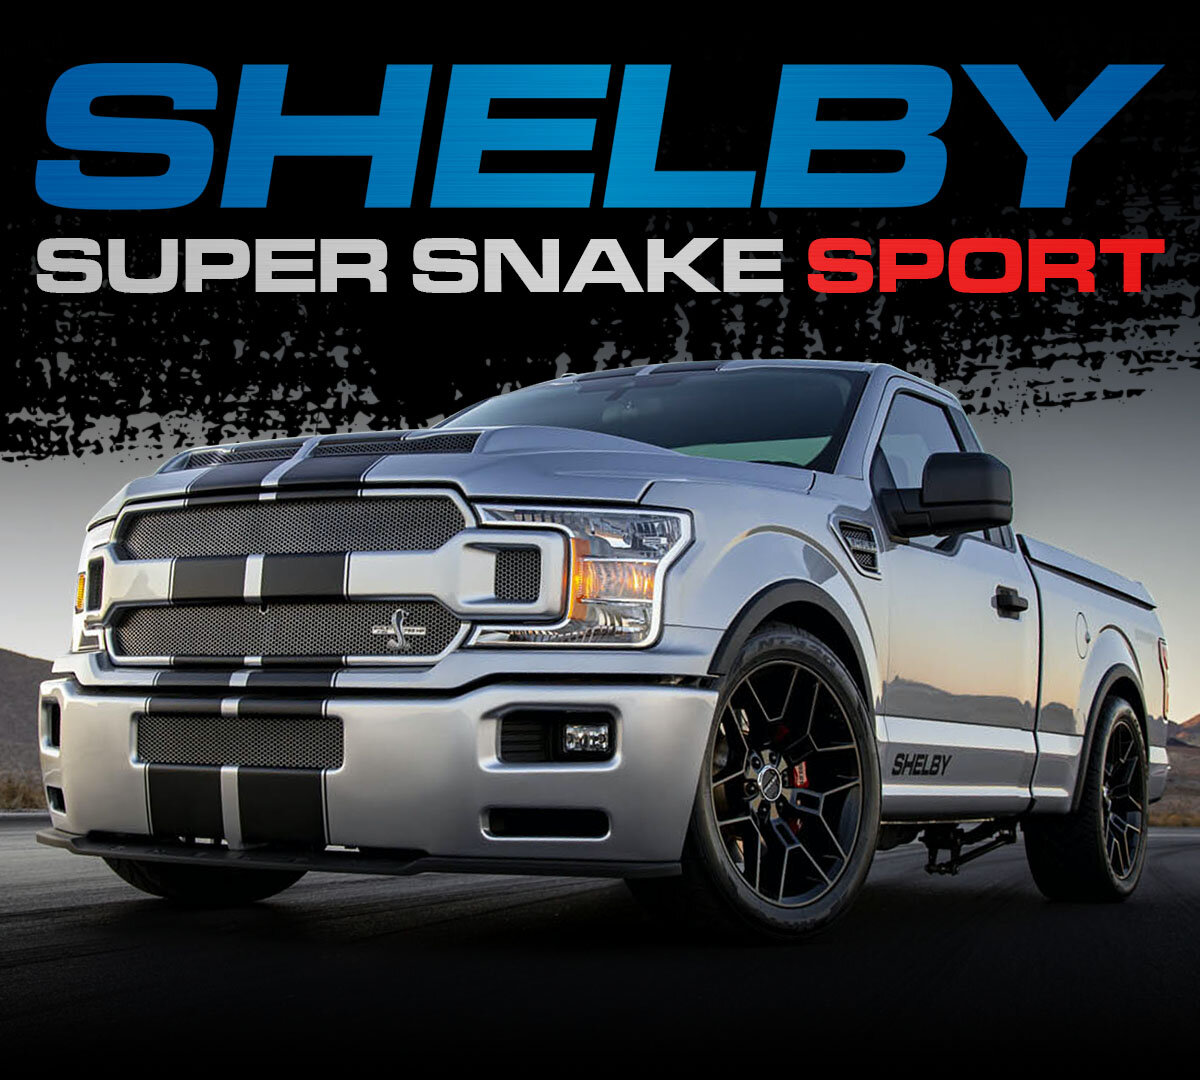 Shelby Super Snake Sport